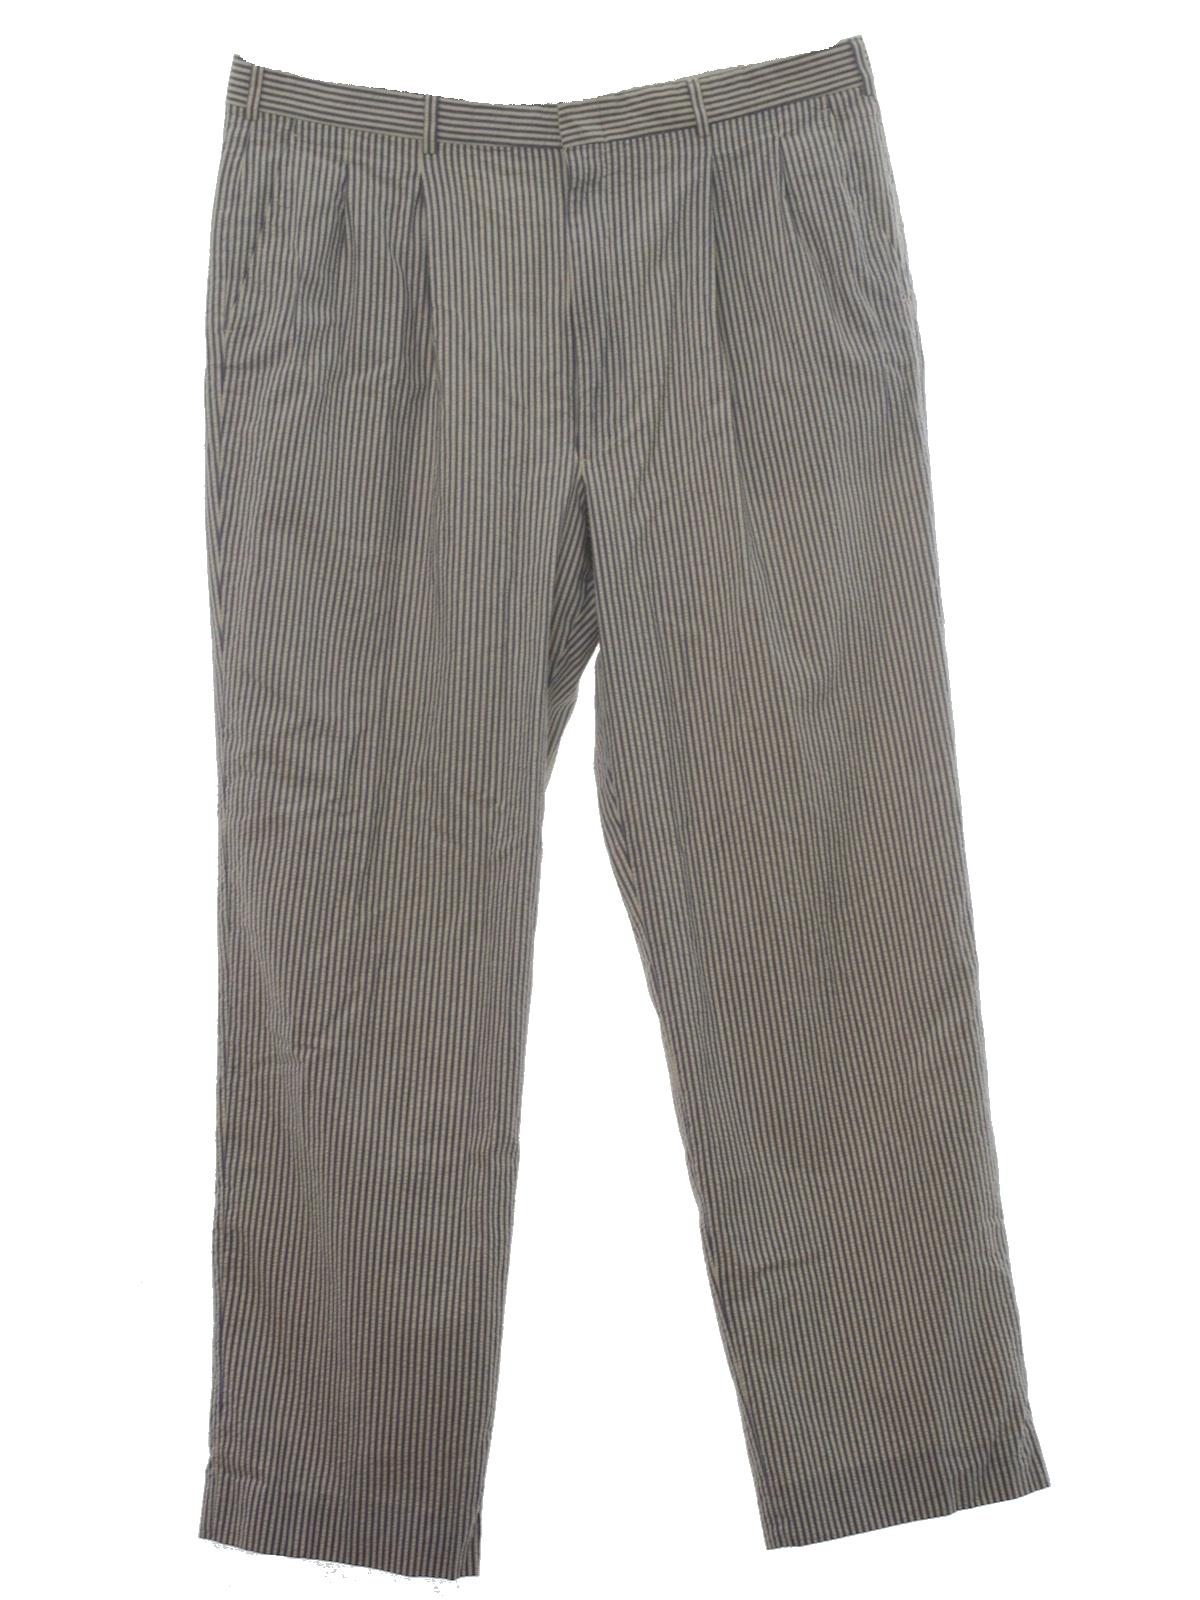 Retro 1980's Pants (fabric label) : 80s -fabric label- Mens off white ...